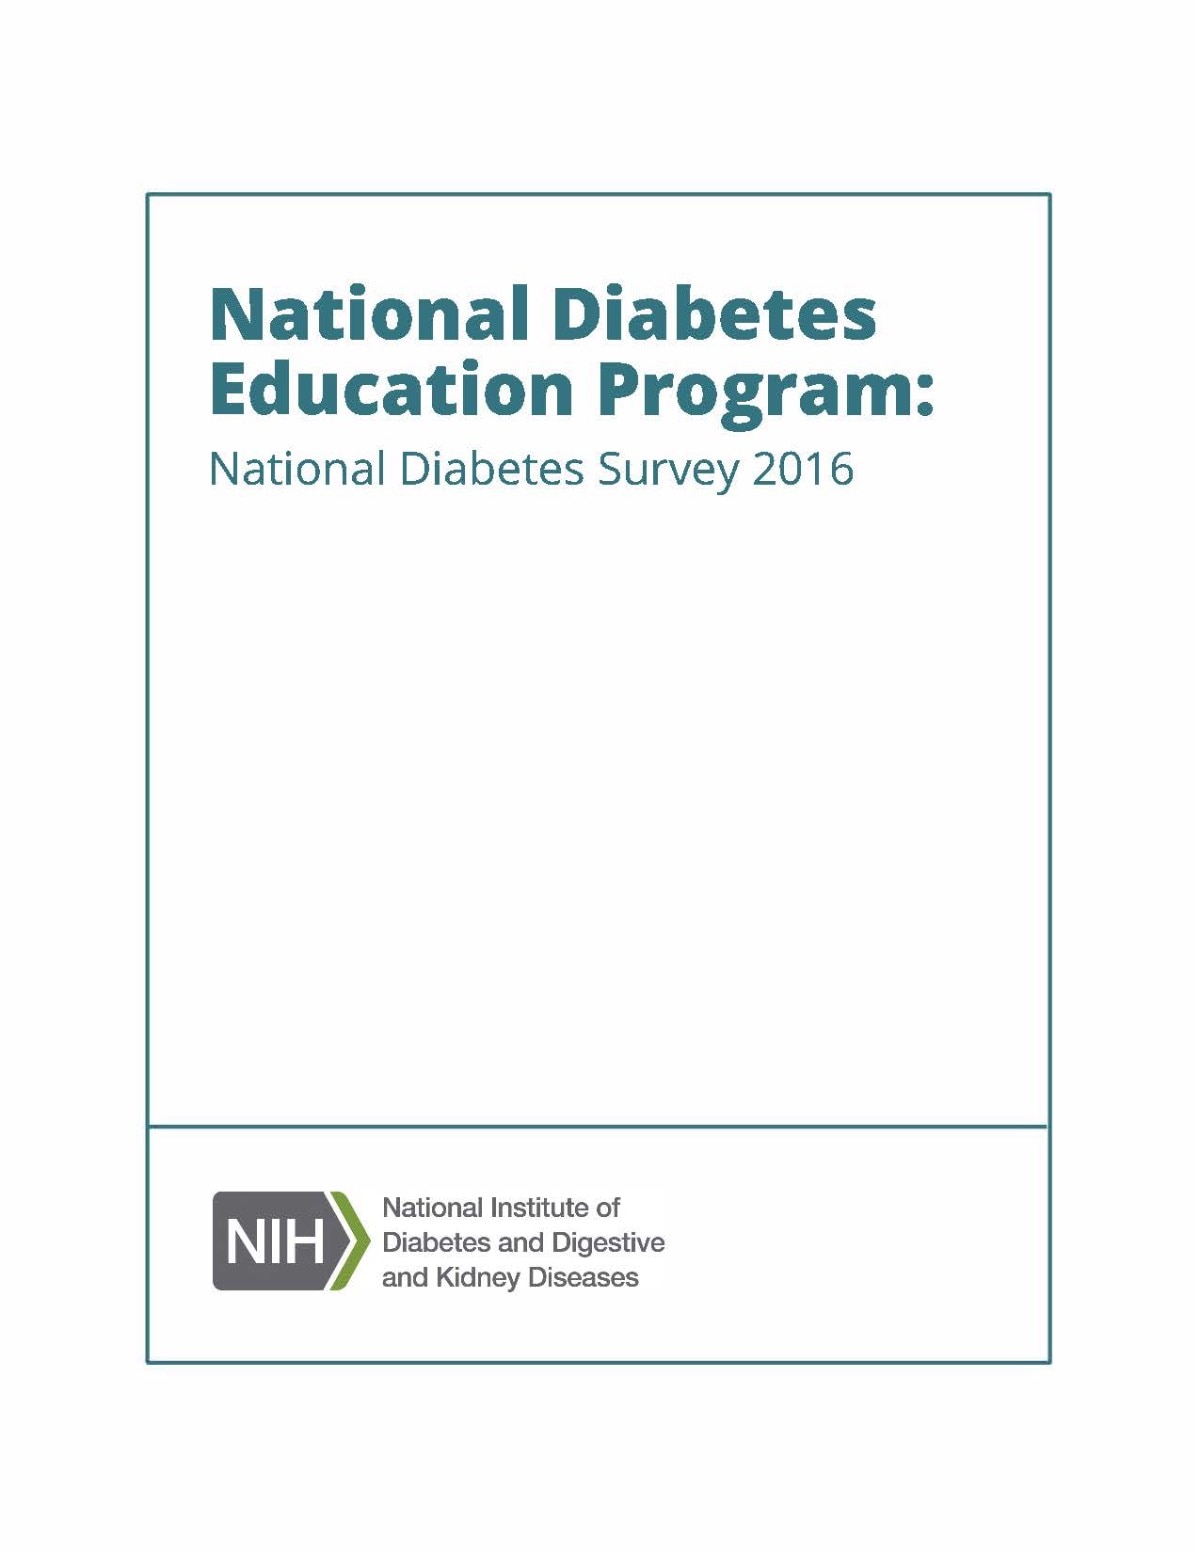 National Diabetes Survey 2016 report cover